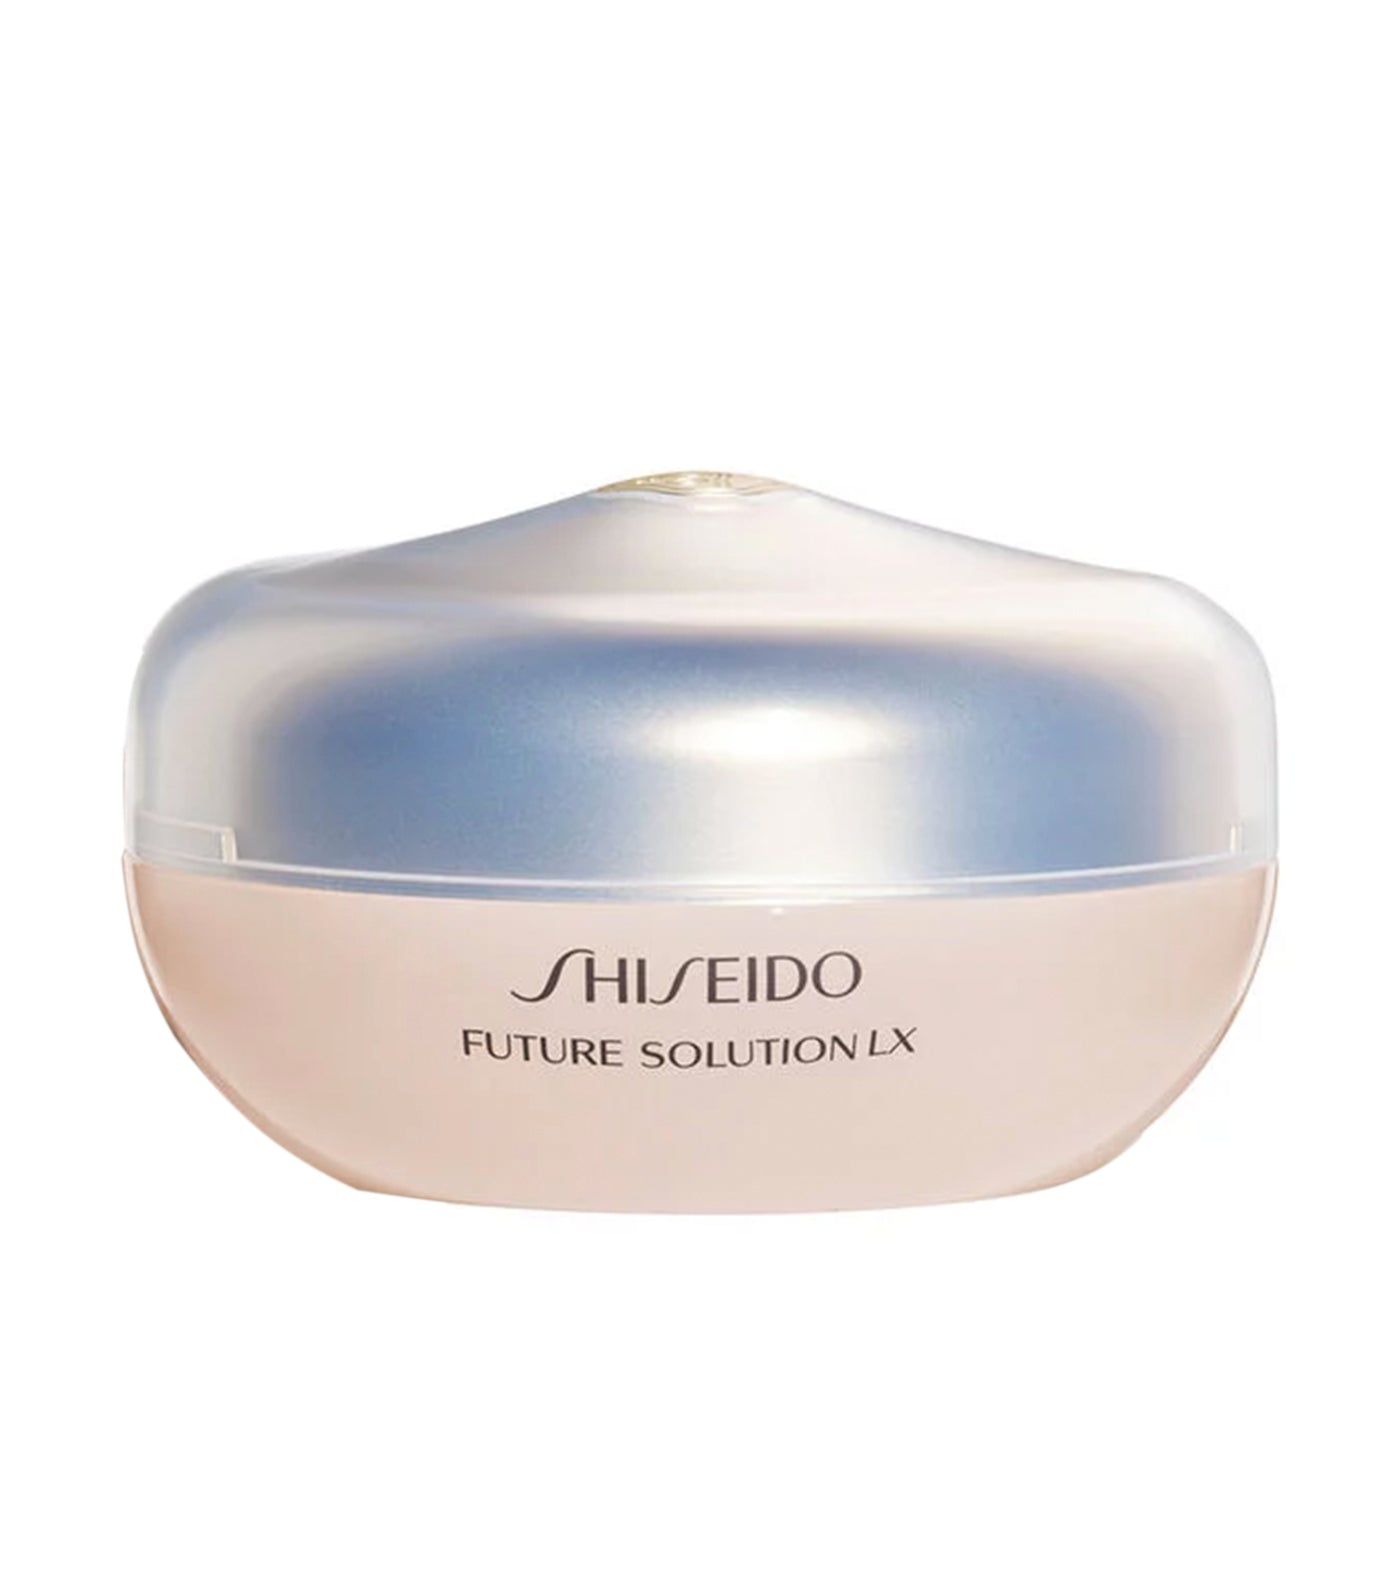 shiseido future solution lx total radiance loose powder